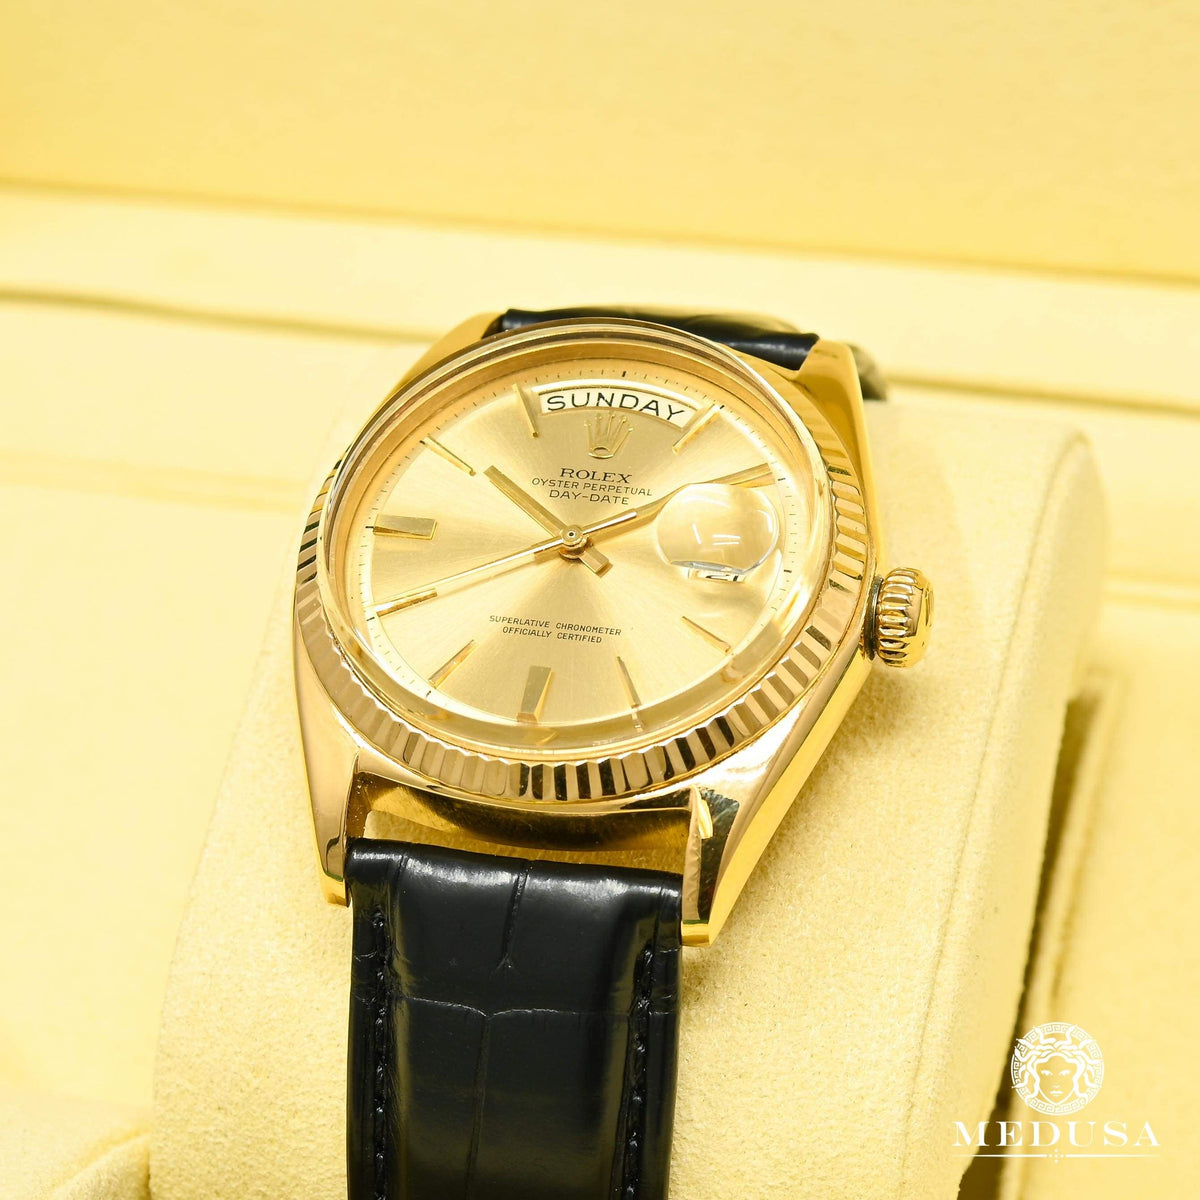 Montre Rolex | Montre Homme Rolex President Day-Date 36mm - Vintage Leather Or Jaune